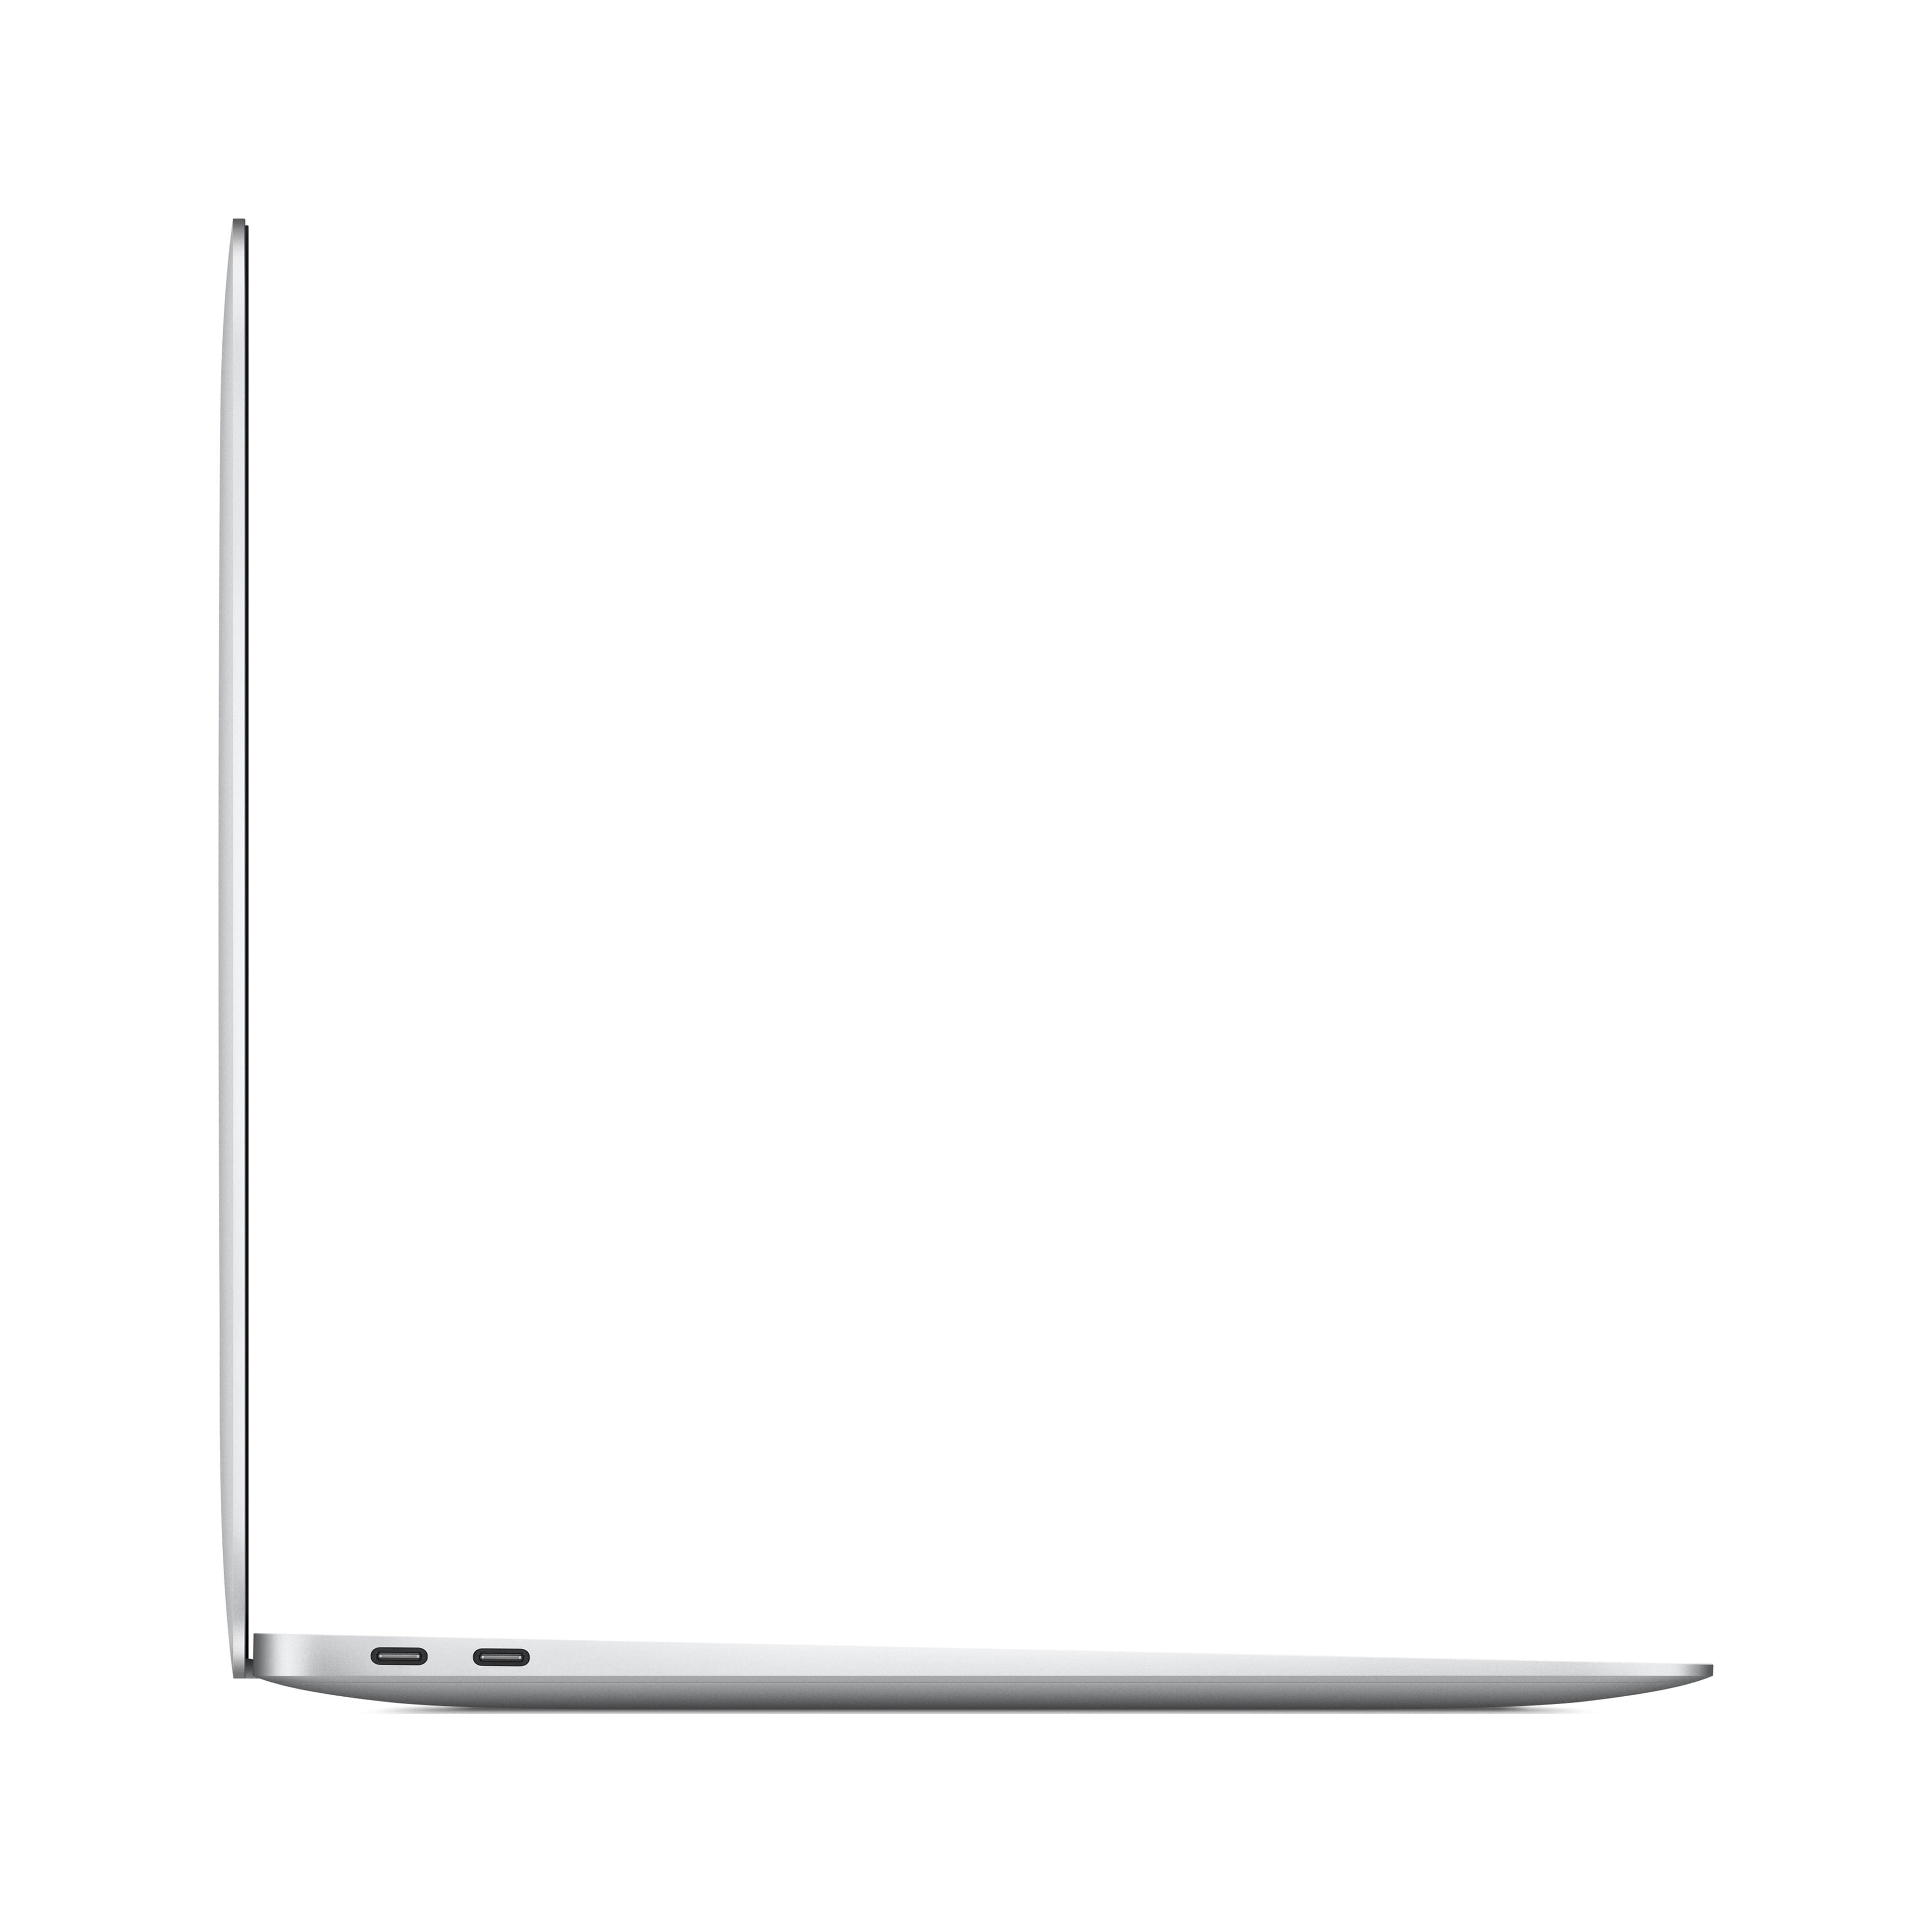 Apple MacBook Air 13.3 inch Laptop - Space Gray, M1 Chip, 8GB RAM 